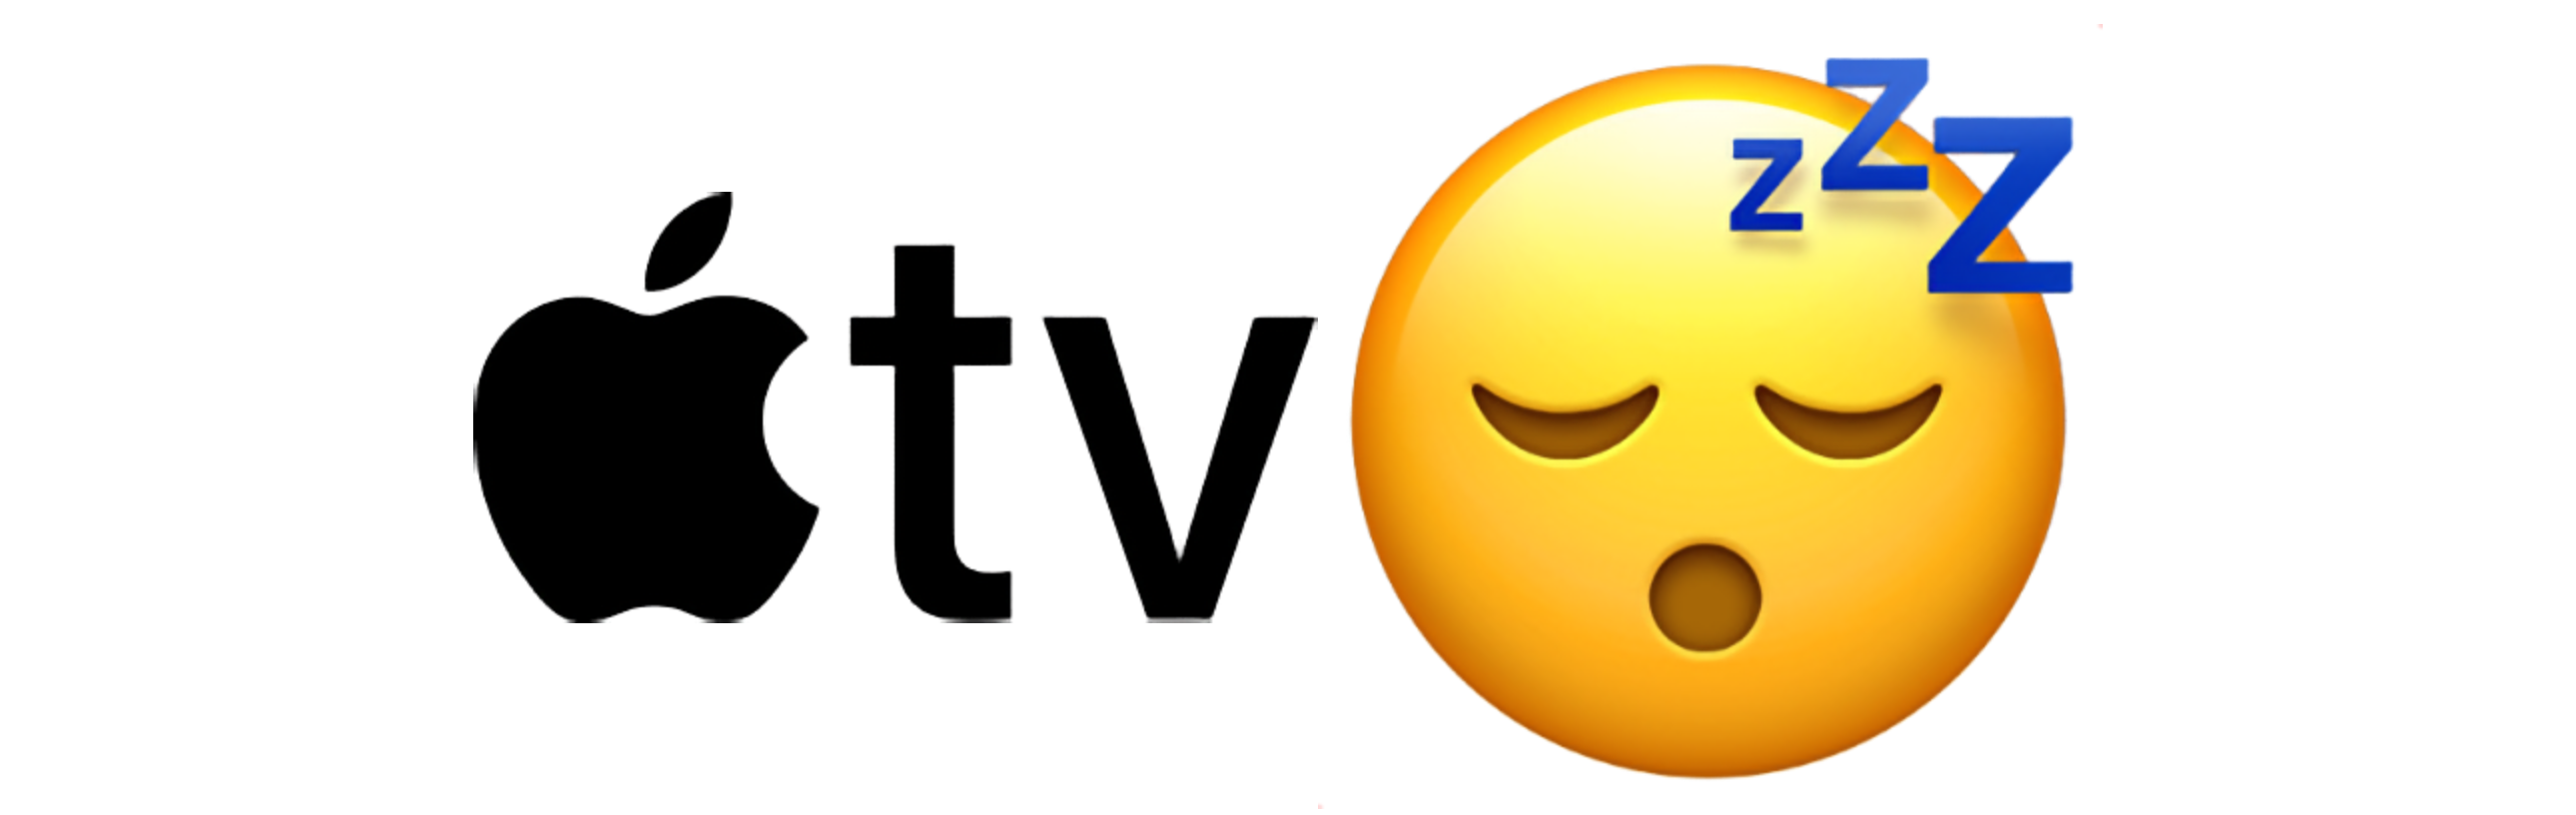 Apple TV logo with a sleeping face emoji